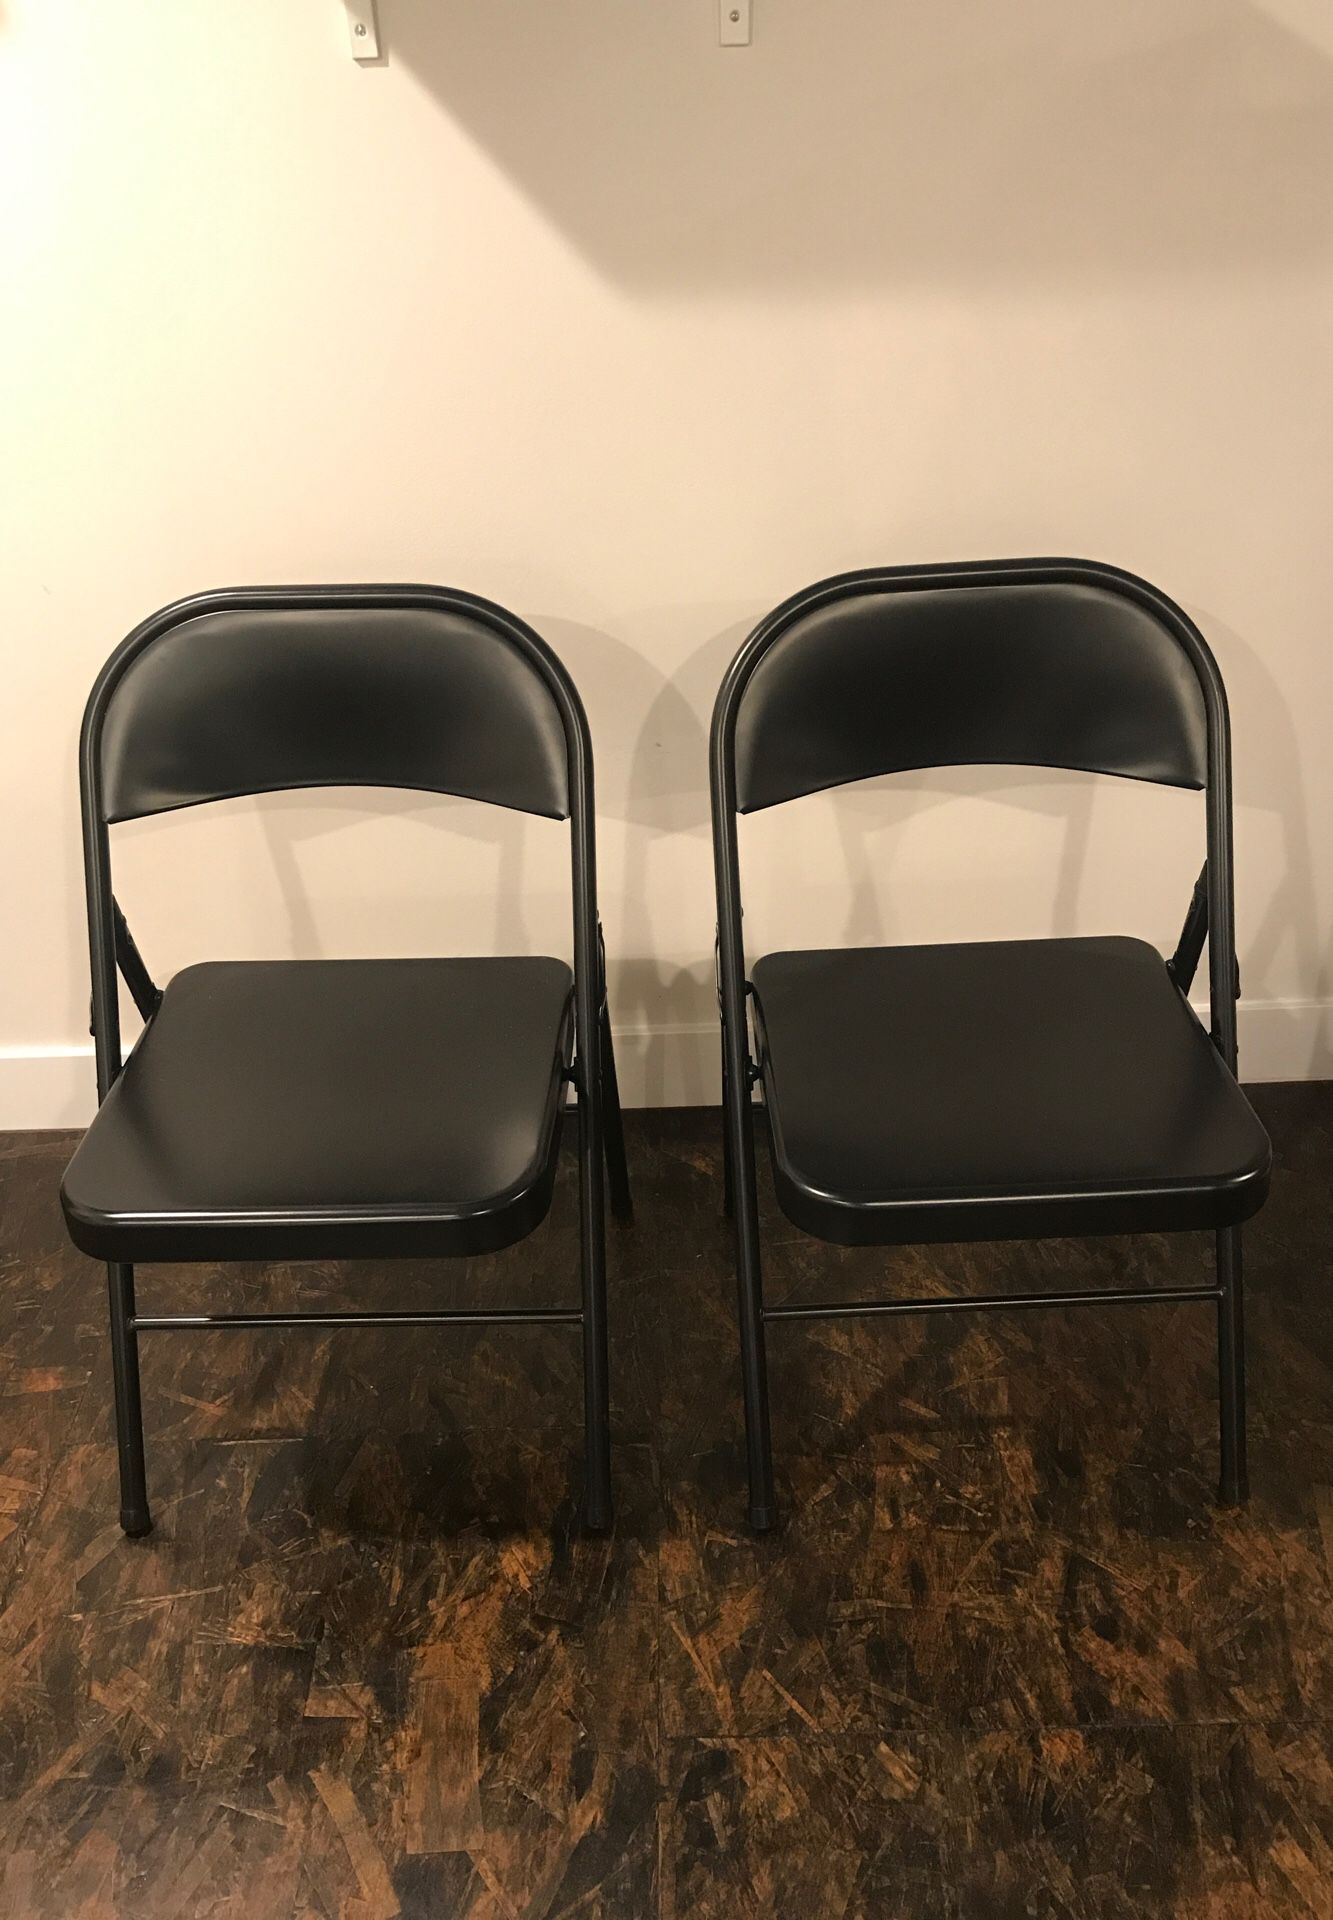 2 metal folding chairs